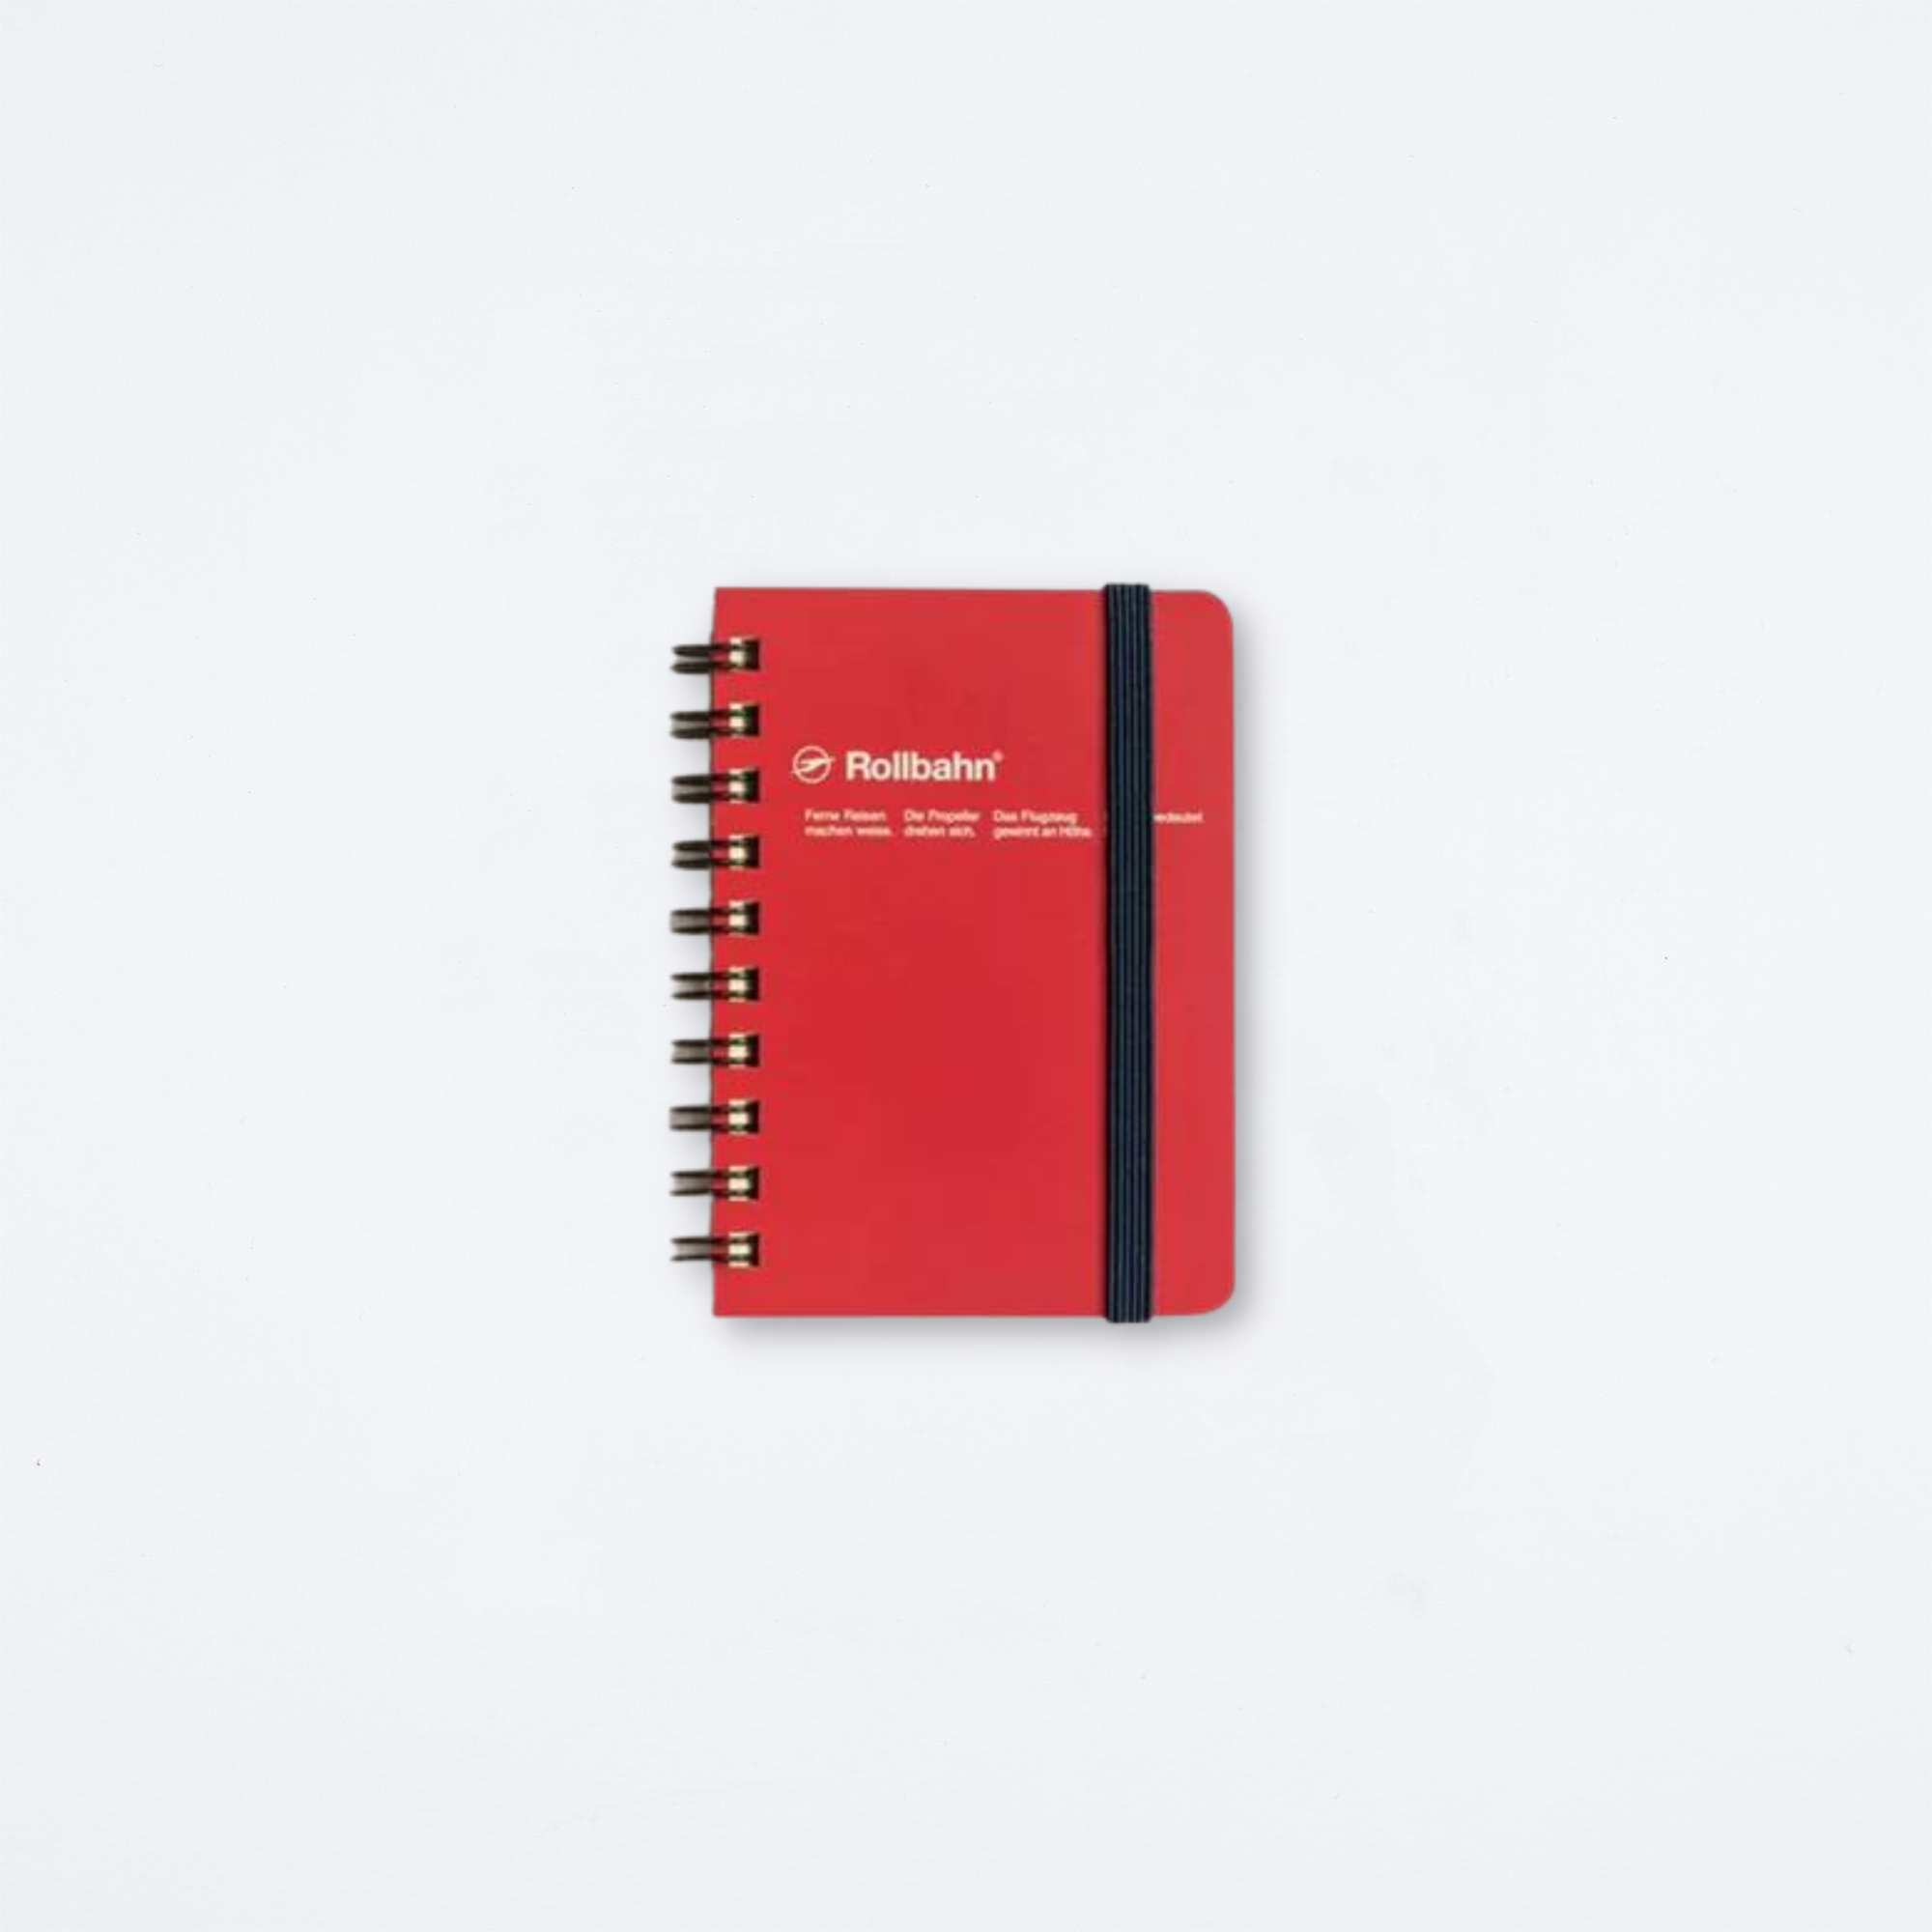 Rollbahn Spiral Mini Memo Notebook